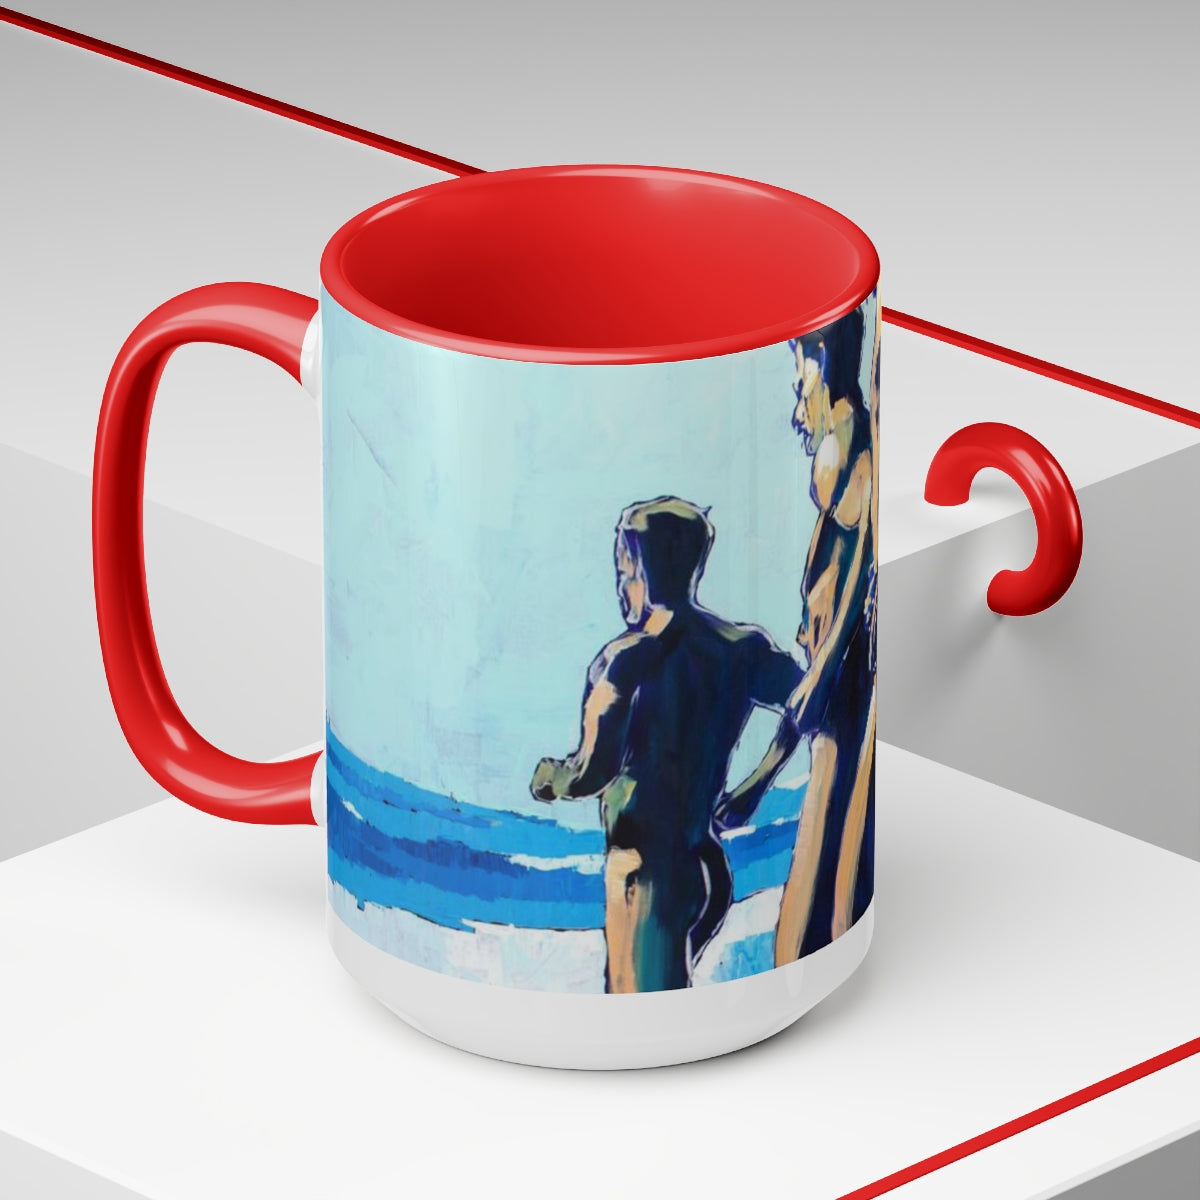 Nude Male Runners on the Beach - Two-Tone Coffee Mugs, 15oz